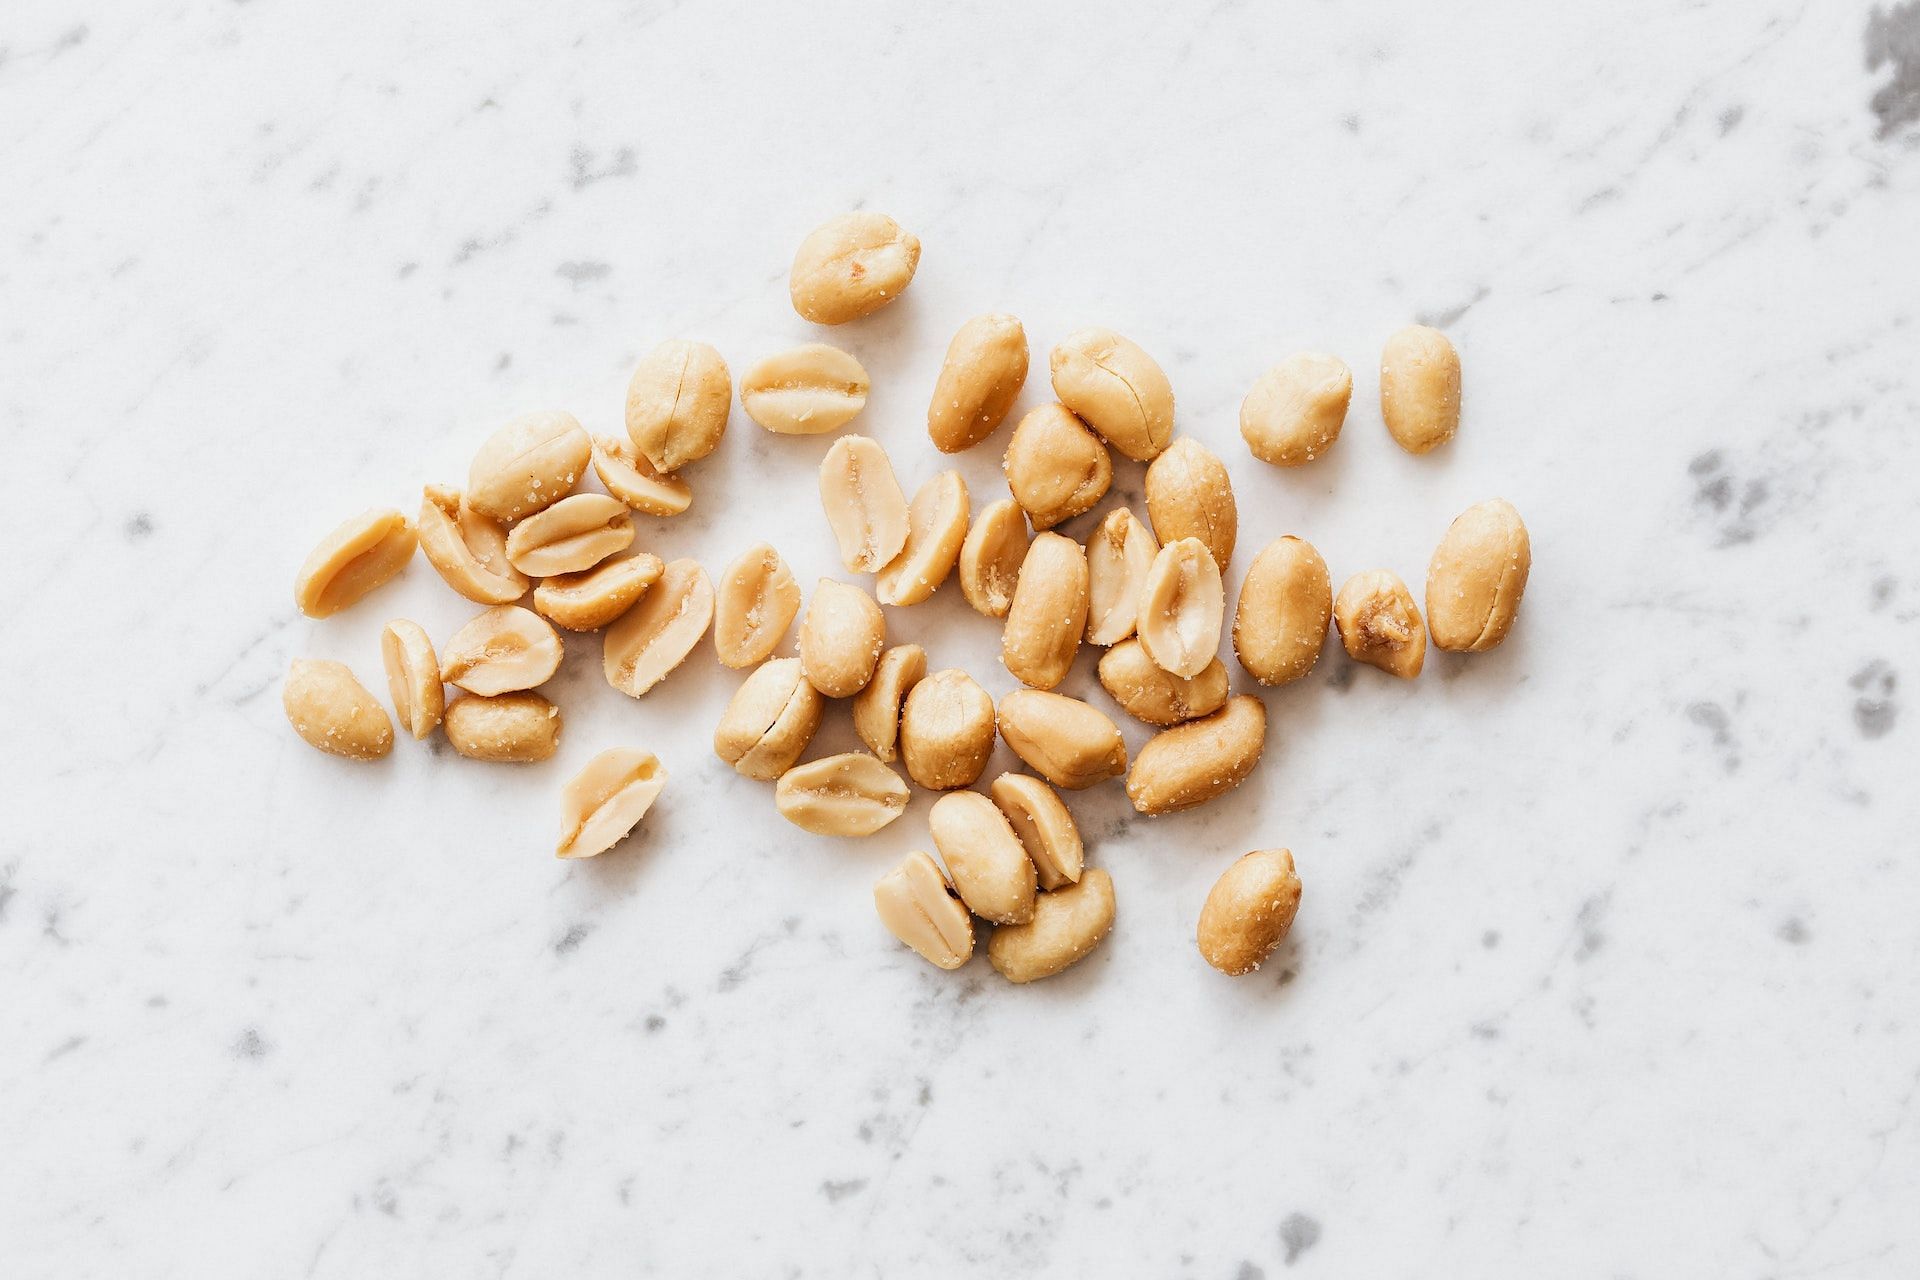 Peanuts are a good food source of coenzyme Q10. (Photo via Pexels/Karolina Grabowska)